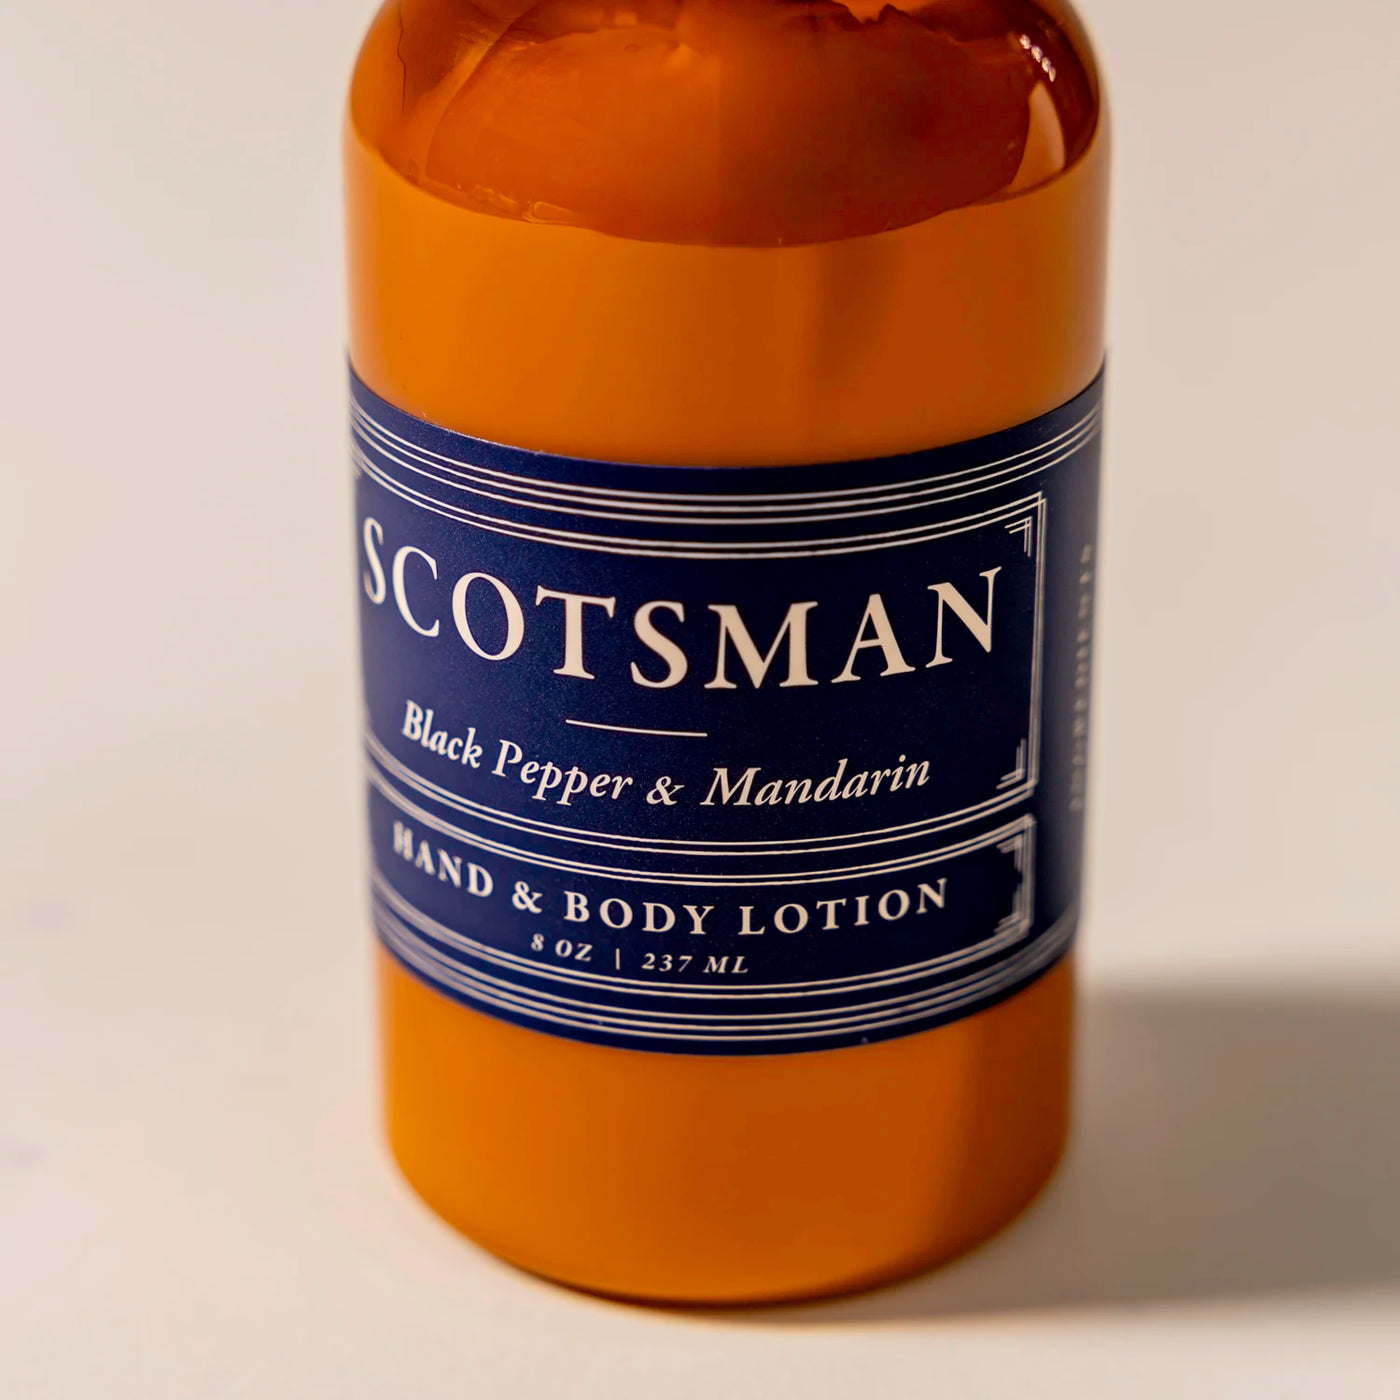 Scotsman Hand & Body Lotion